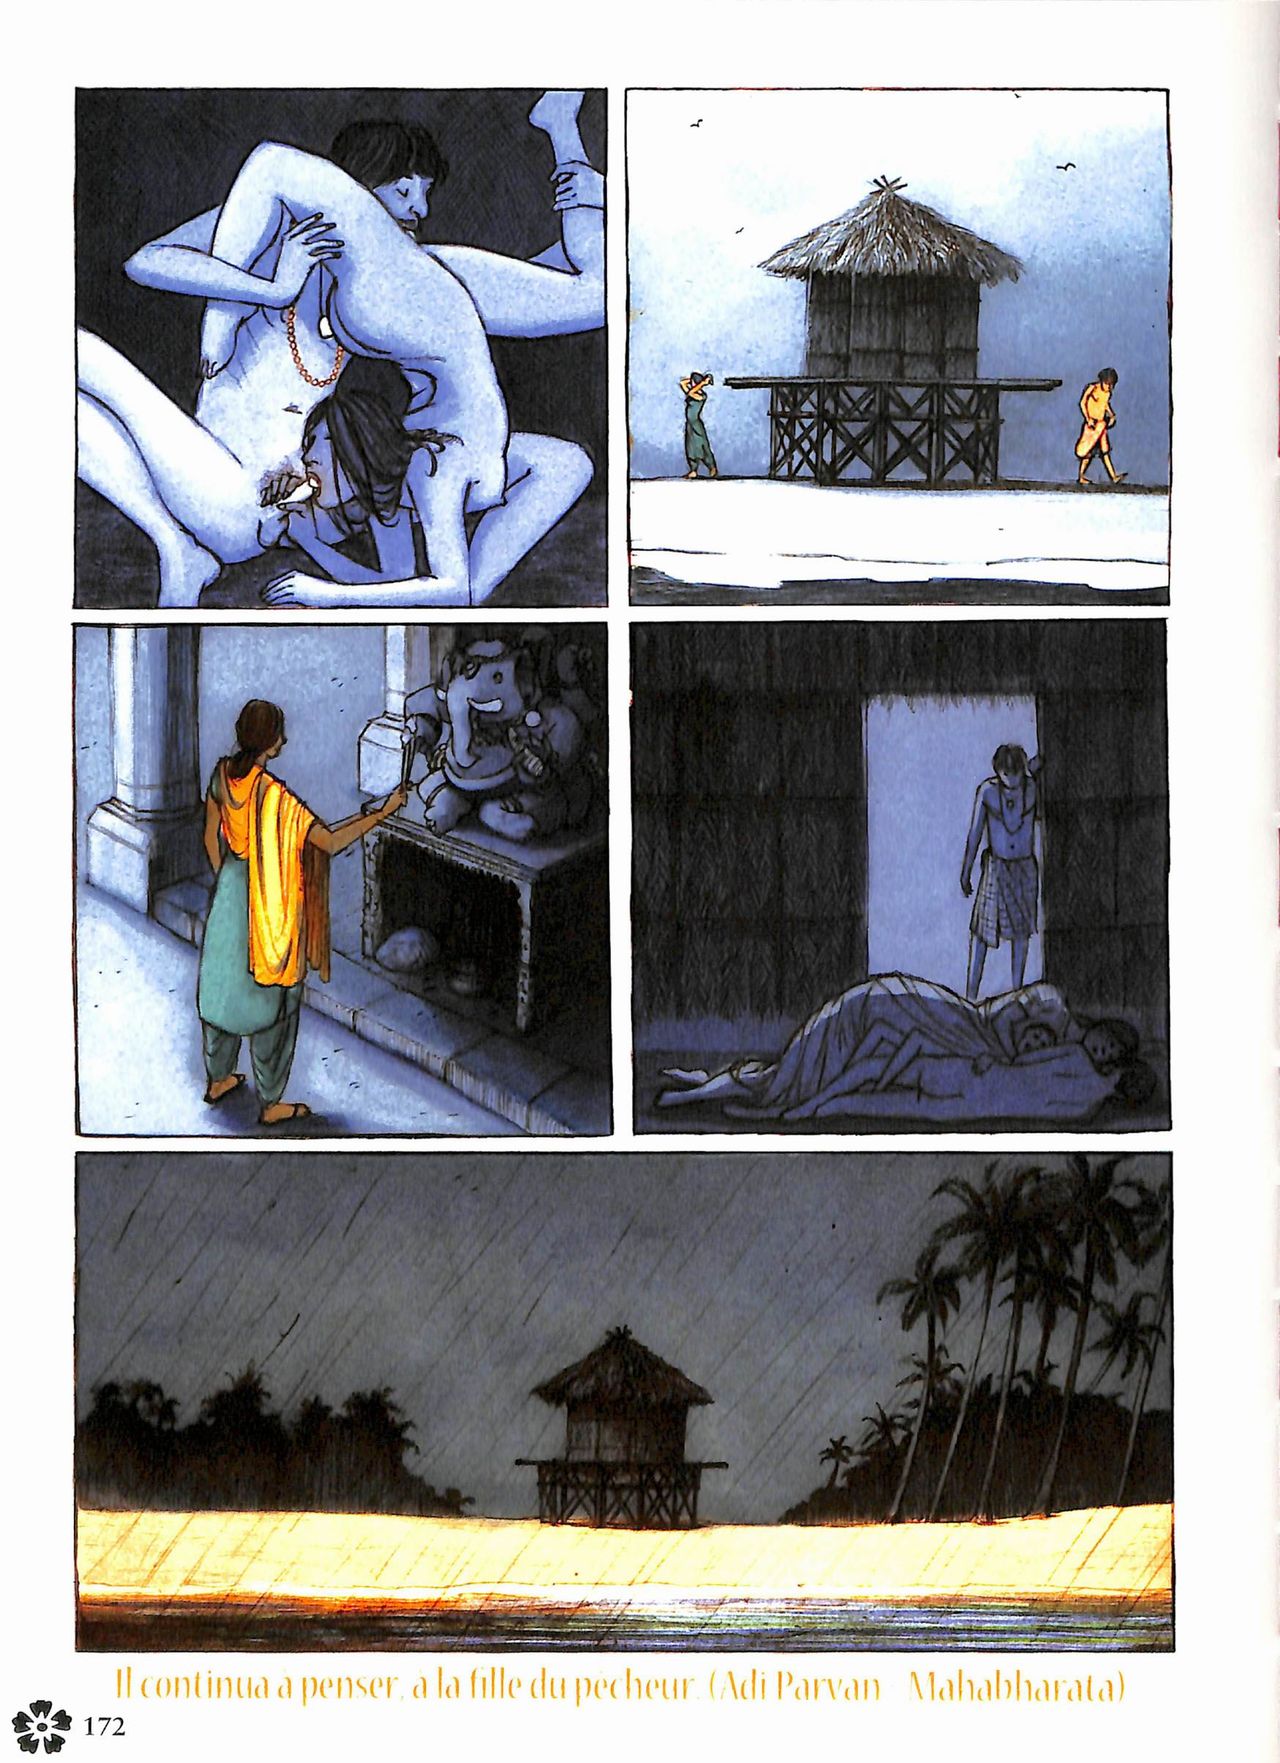 Kama Sutra en bandes dessinées - Kama Sutra with Comics numero d'image 172